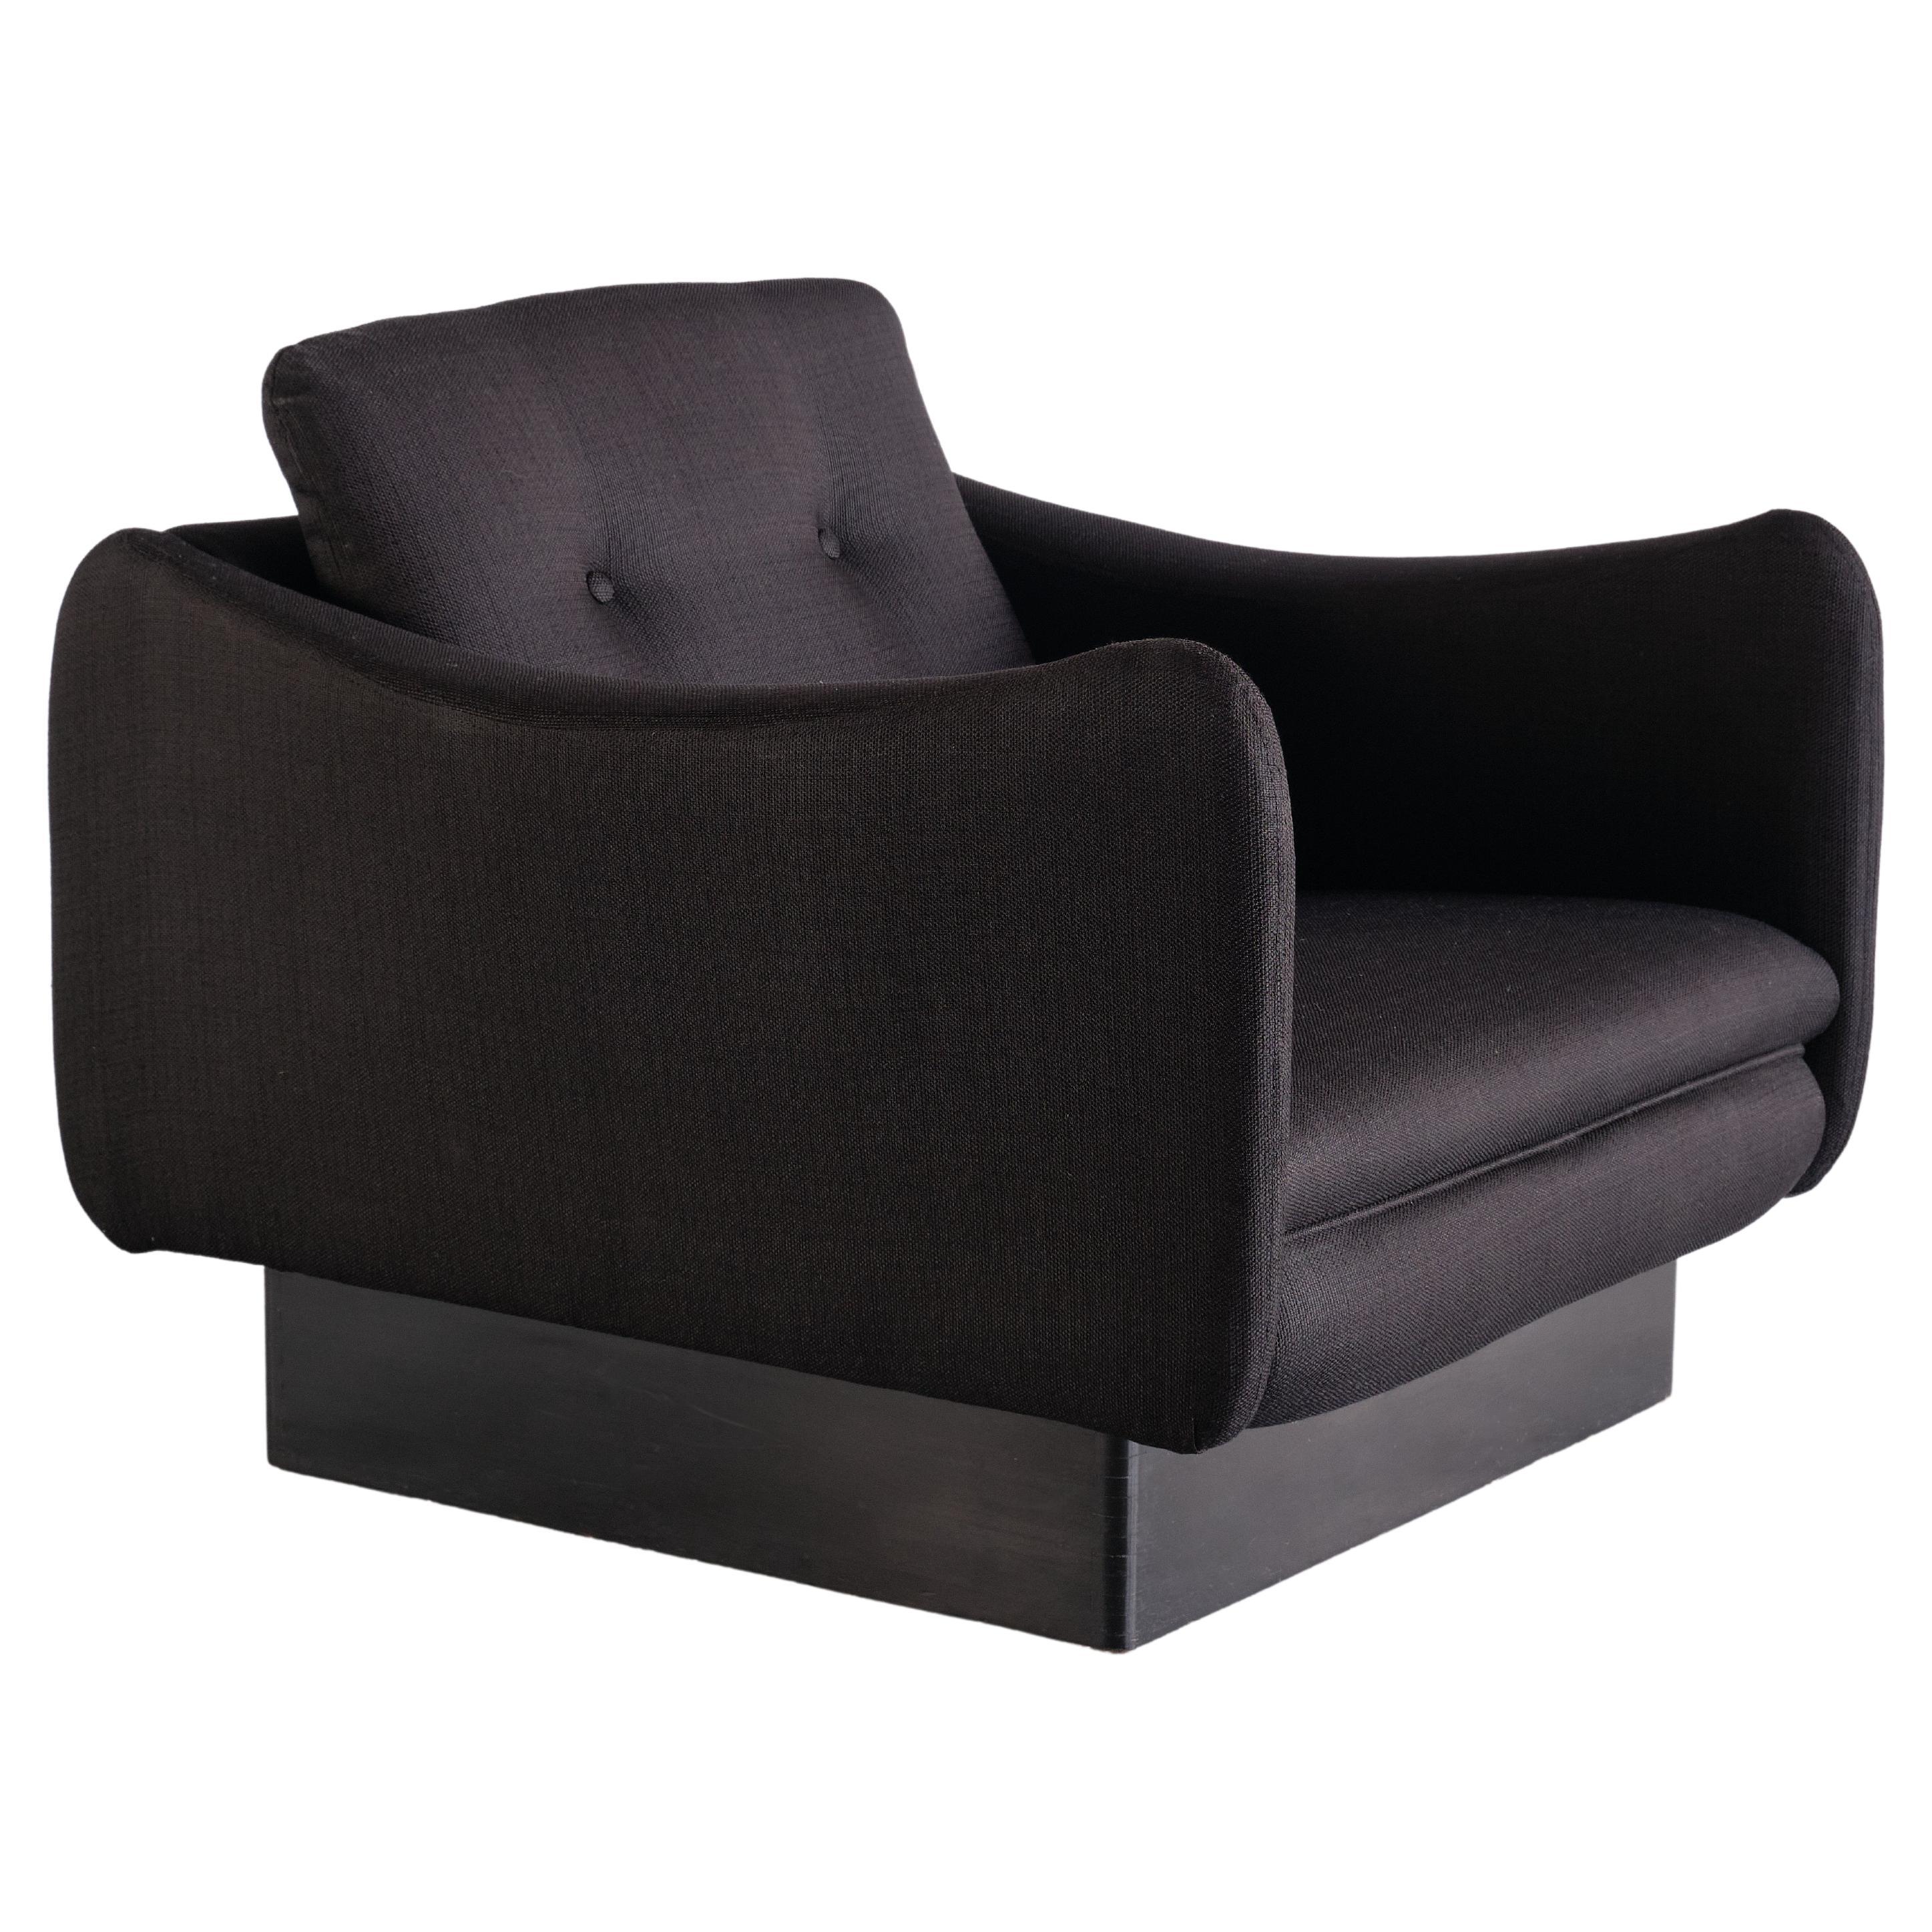 Michel Mortier 'Teckel' Lounge Chair in Black Wool & Wood, Steiner, France, 1963 For Sale